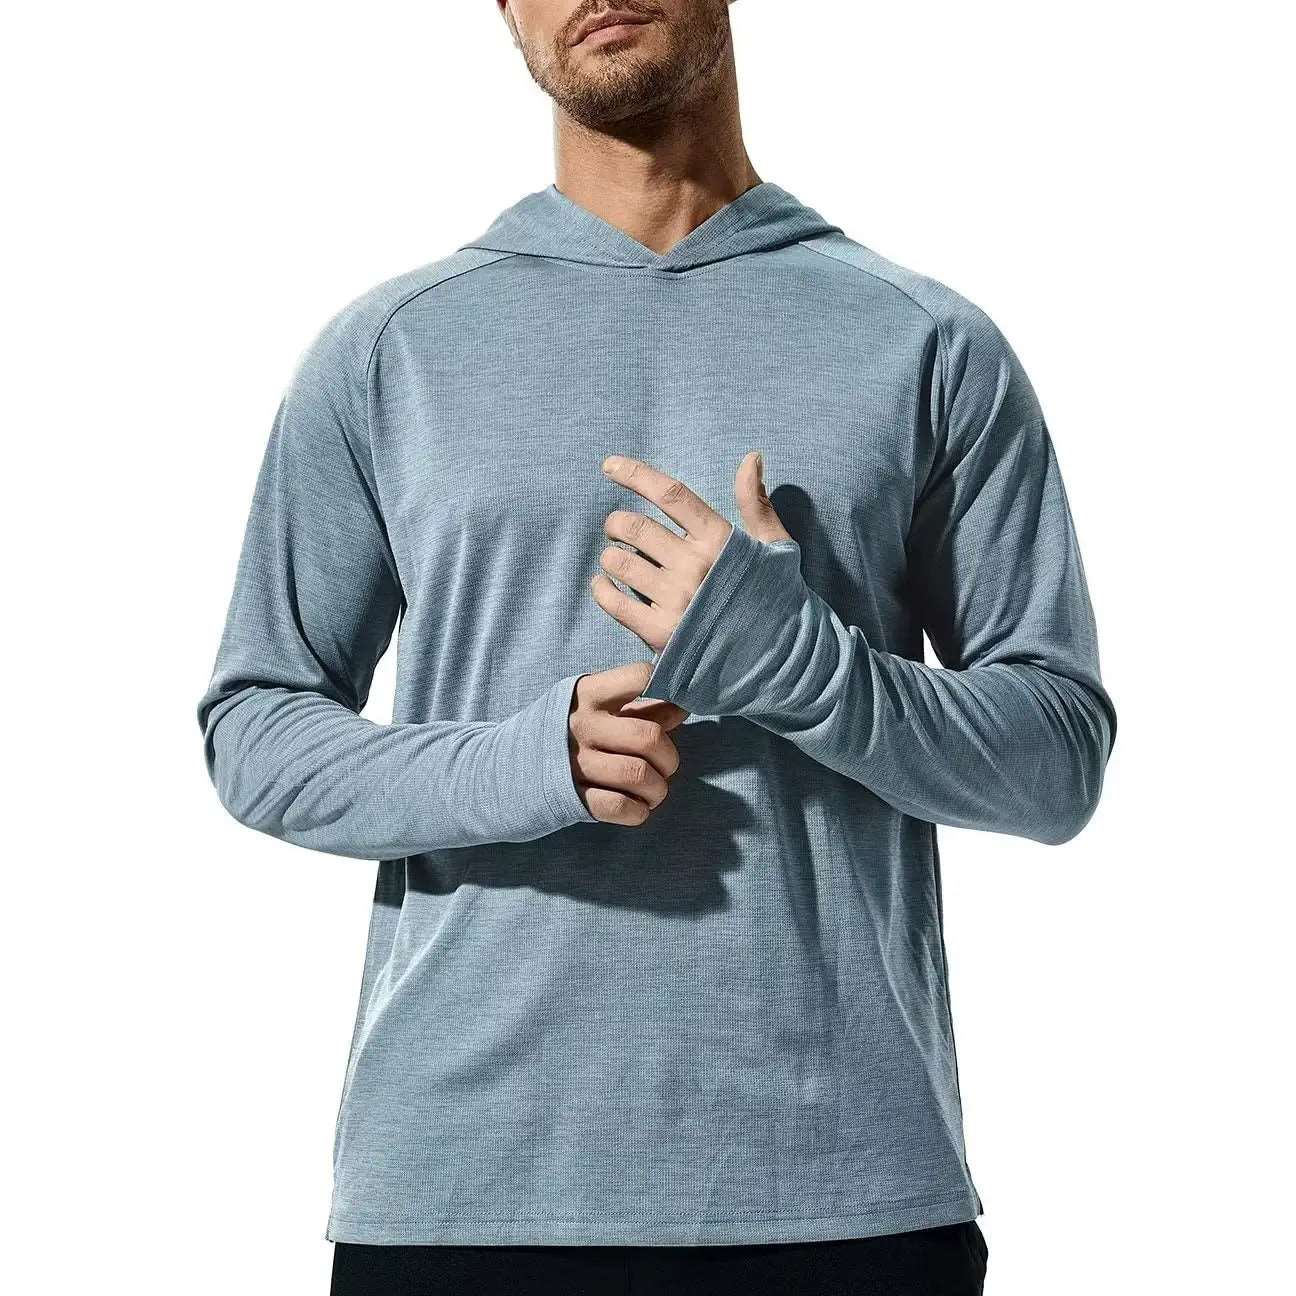 Haimont Men's UPF 50+ Sun Protection Hoodie Shirt with Thumbholes, Haze Blue / XL